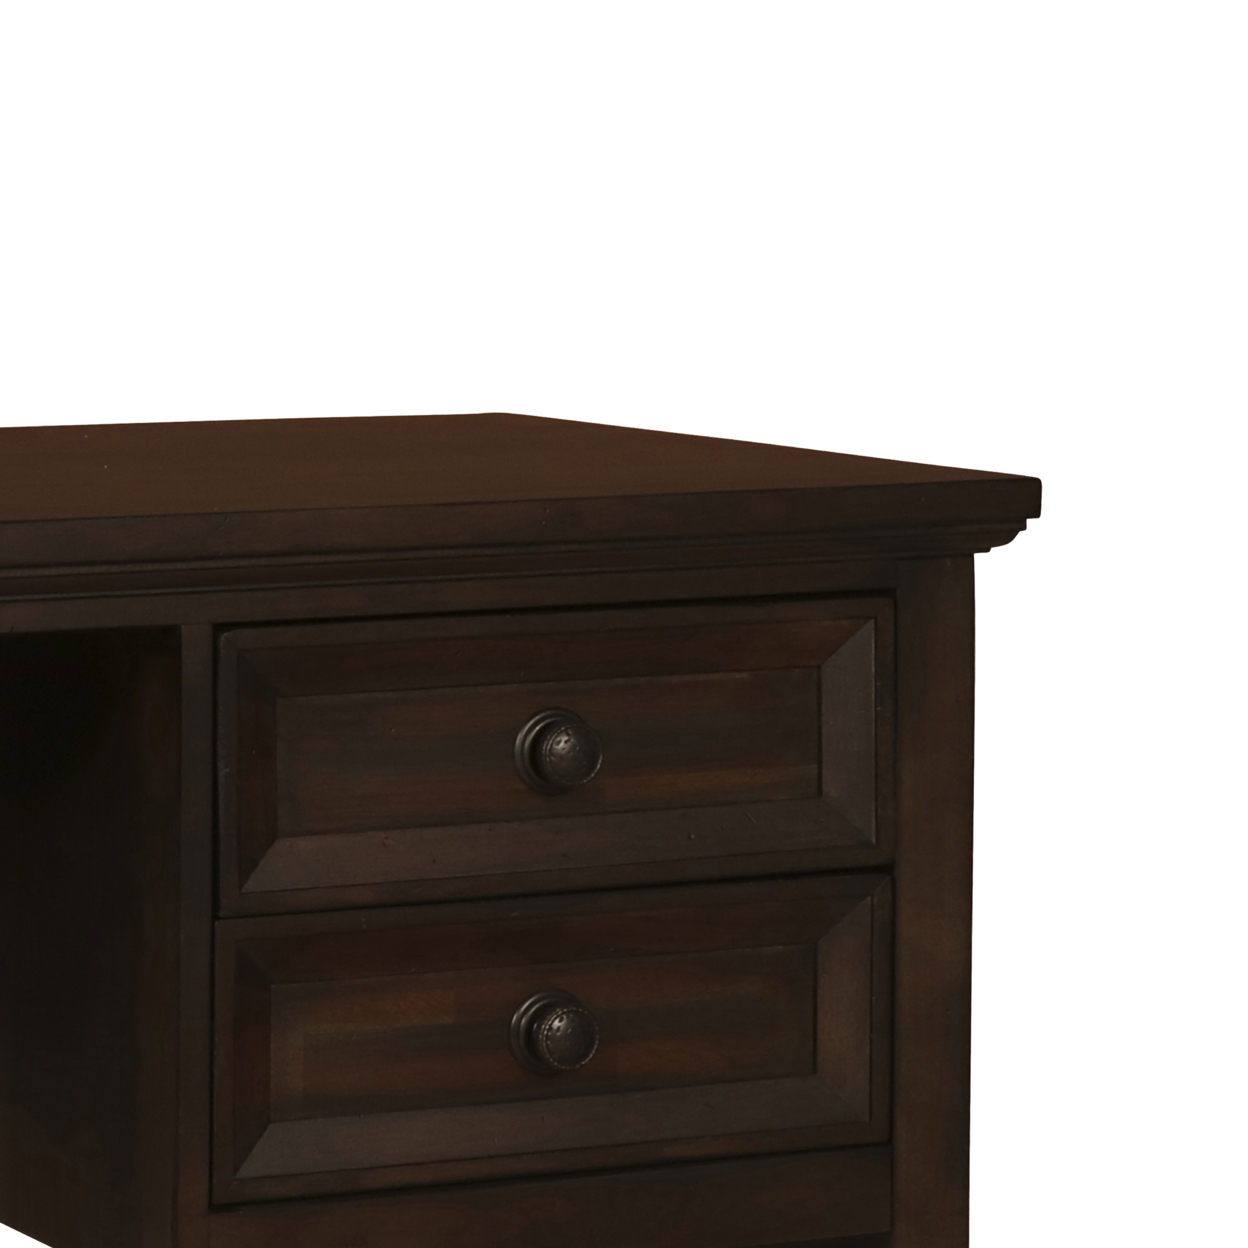 Wooden Writing Desk With 2 Spacious Storage Drawers, Brown- Saltoro Sherpi